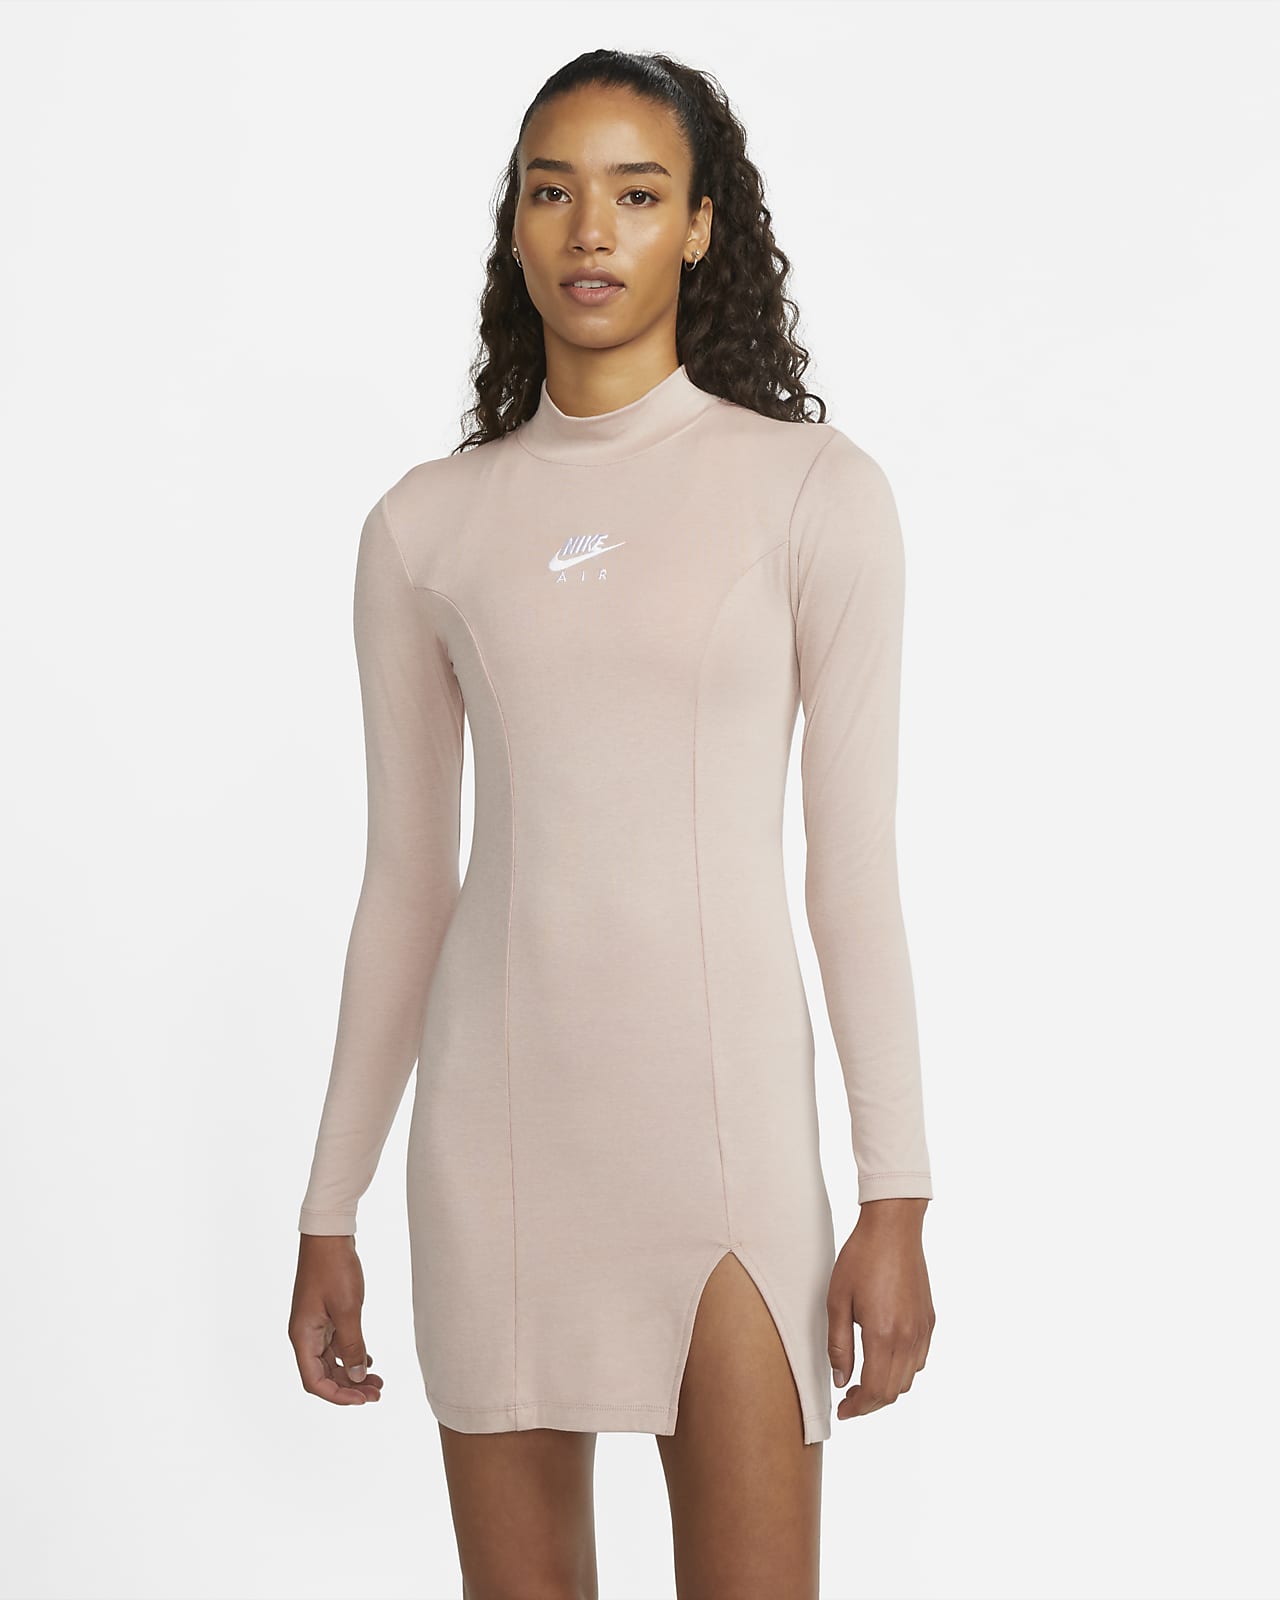 necesidad Destello Disfraces Vestido de manga larga para mujer Nike Air. Nike.com